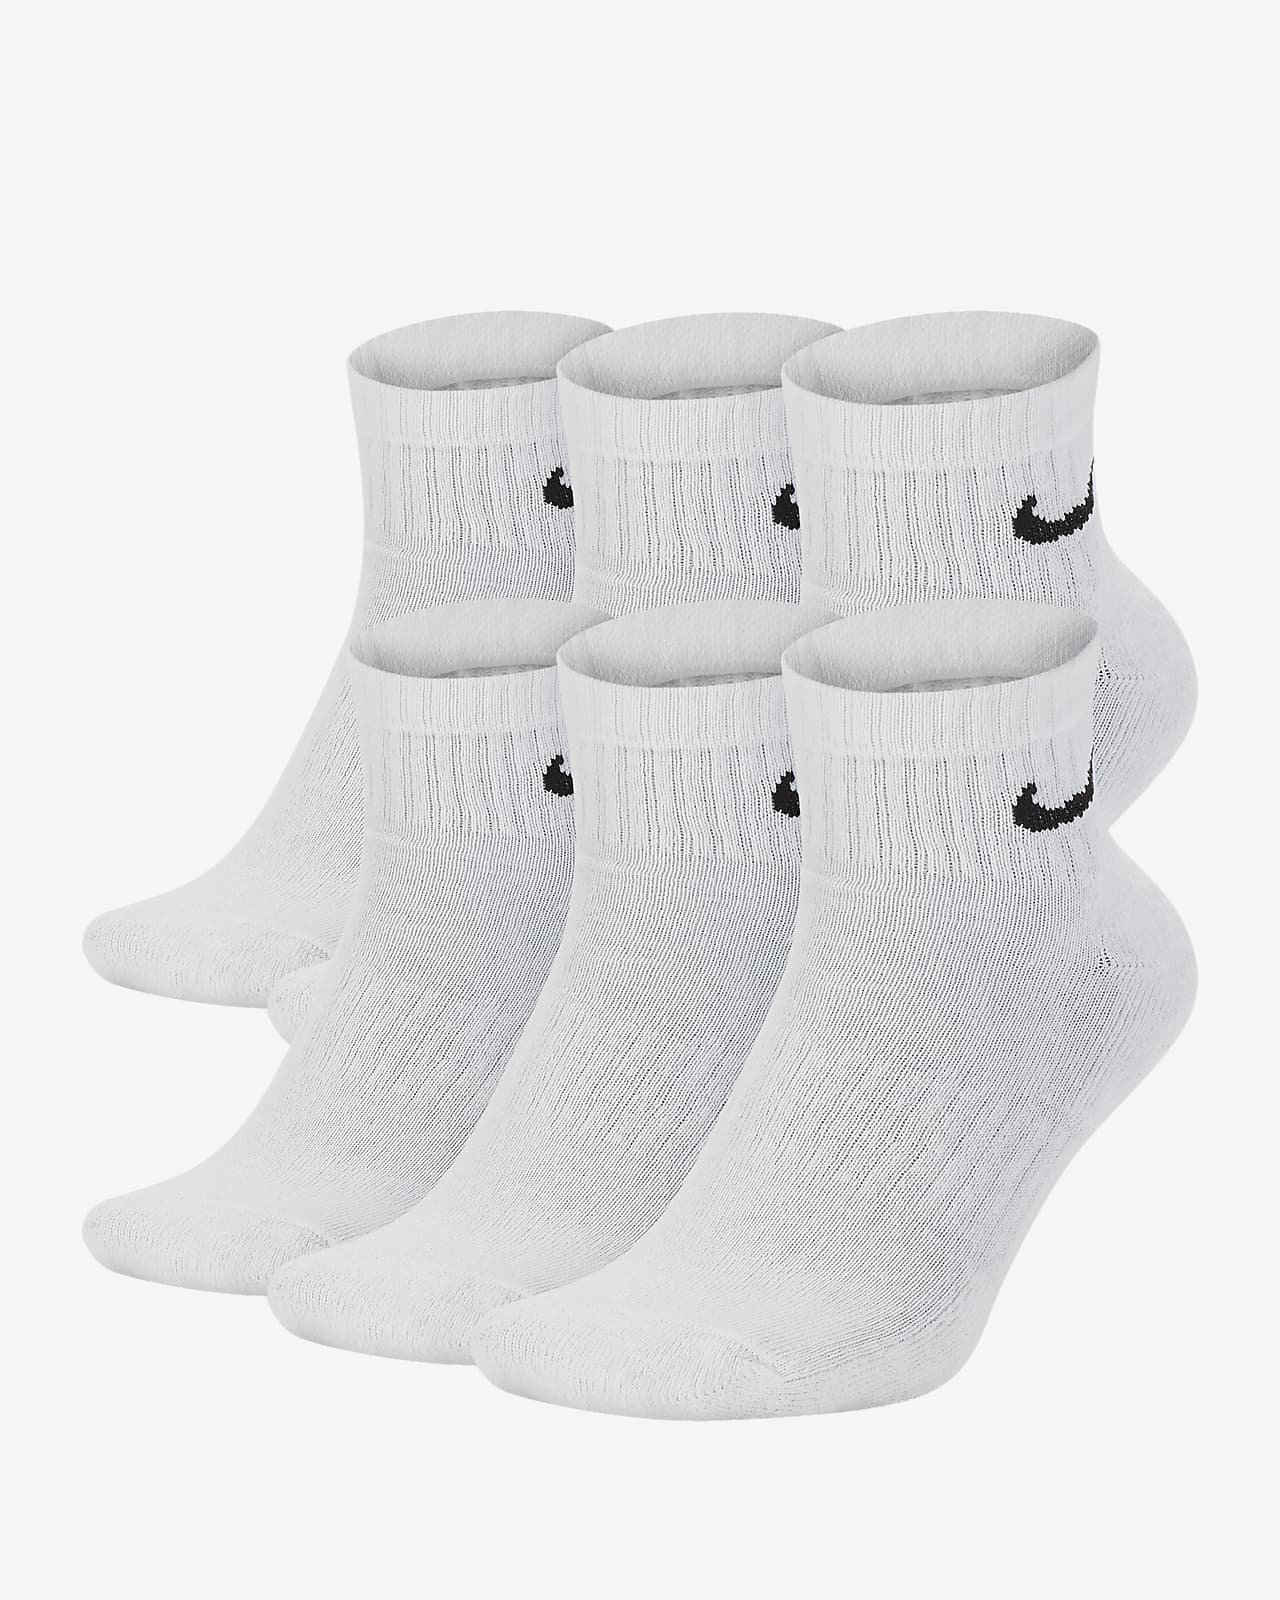 pair of nike socks